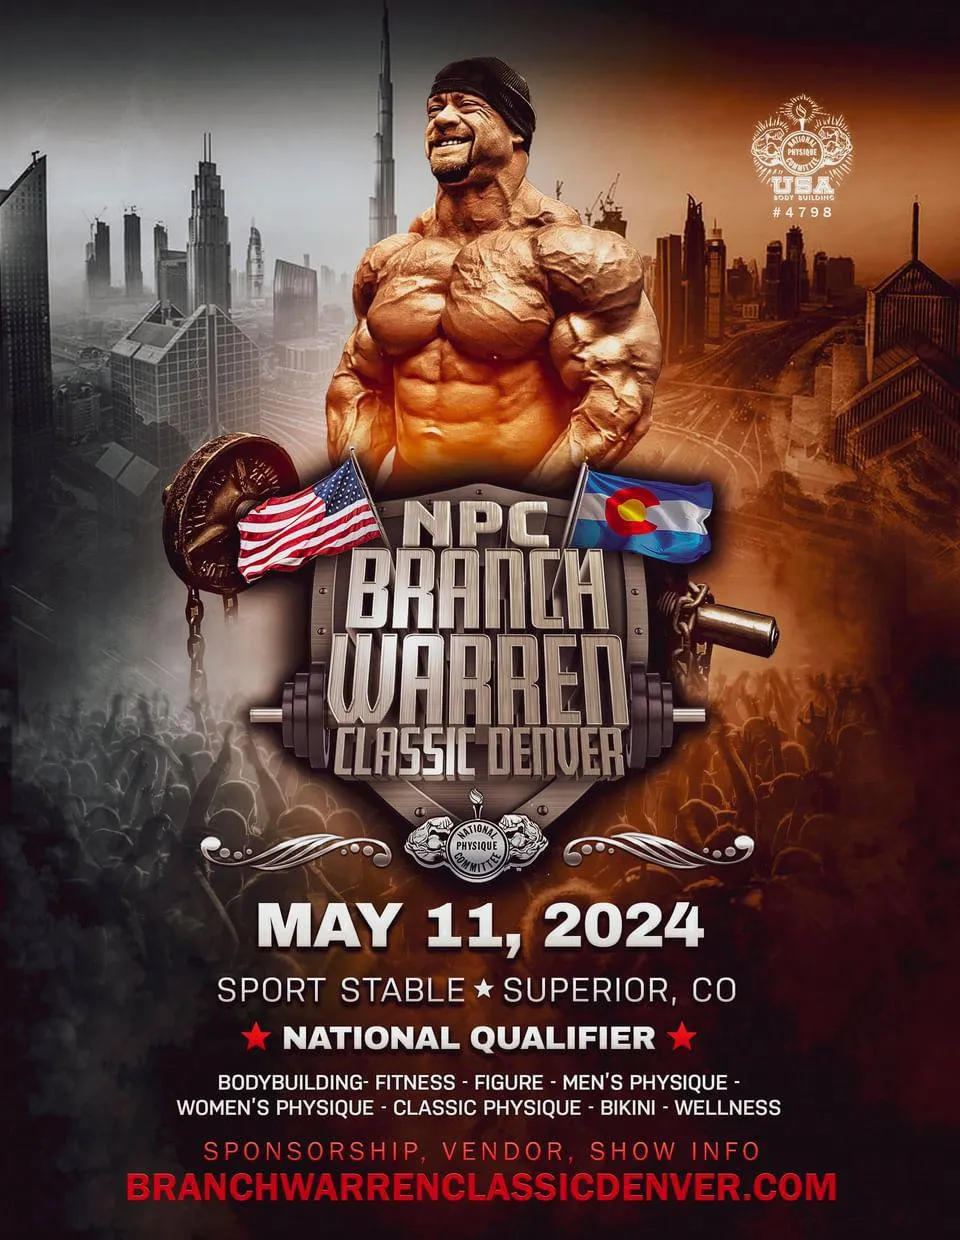 NPC Branch Warren Classic Denver - May 11 - Sport Stable, CO